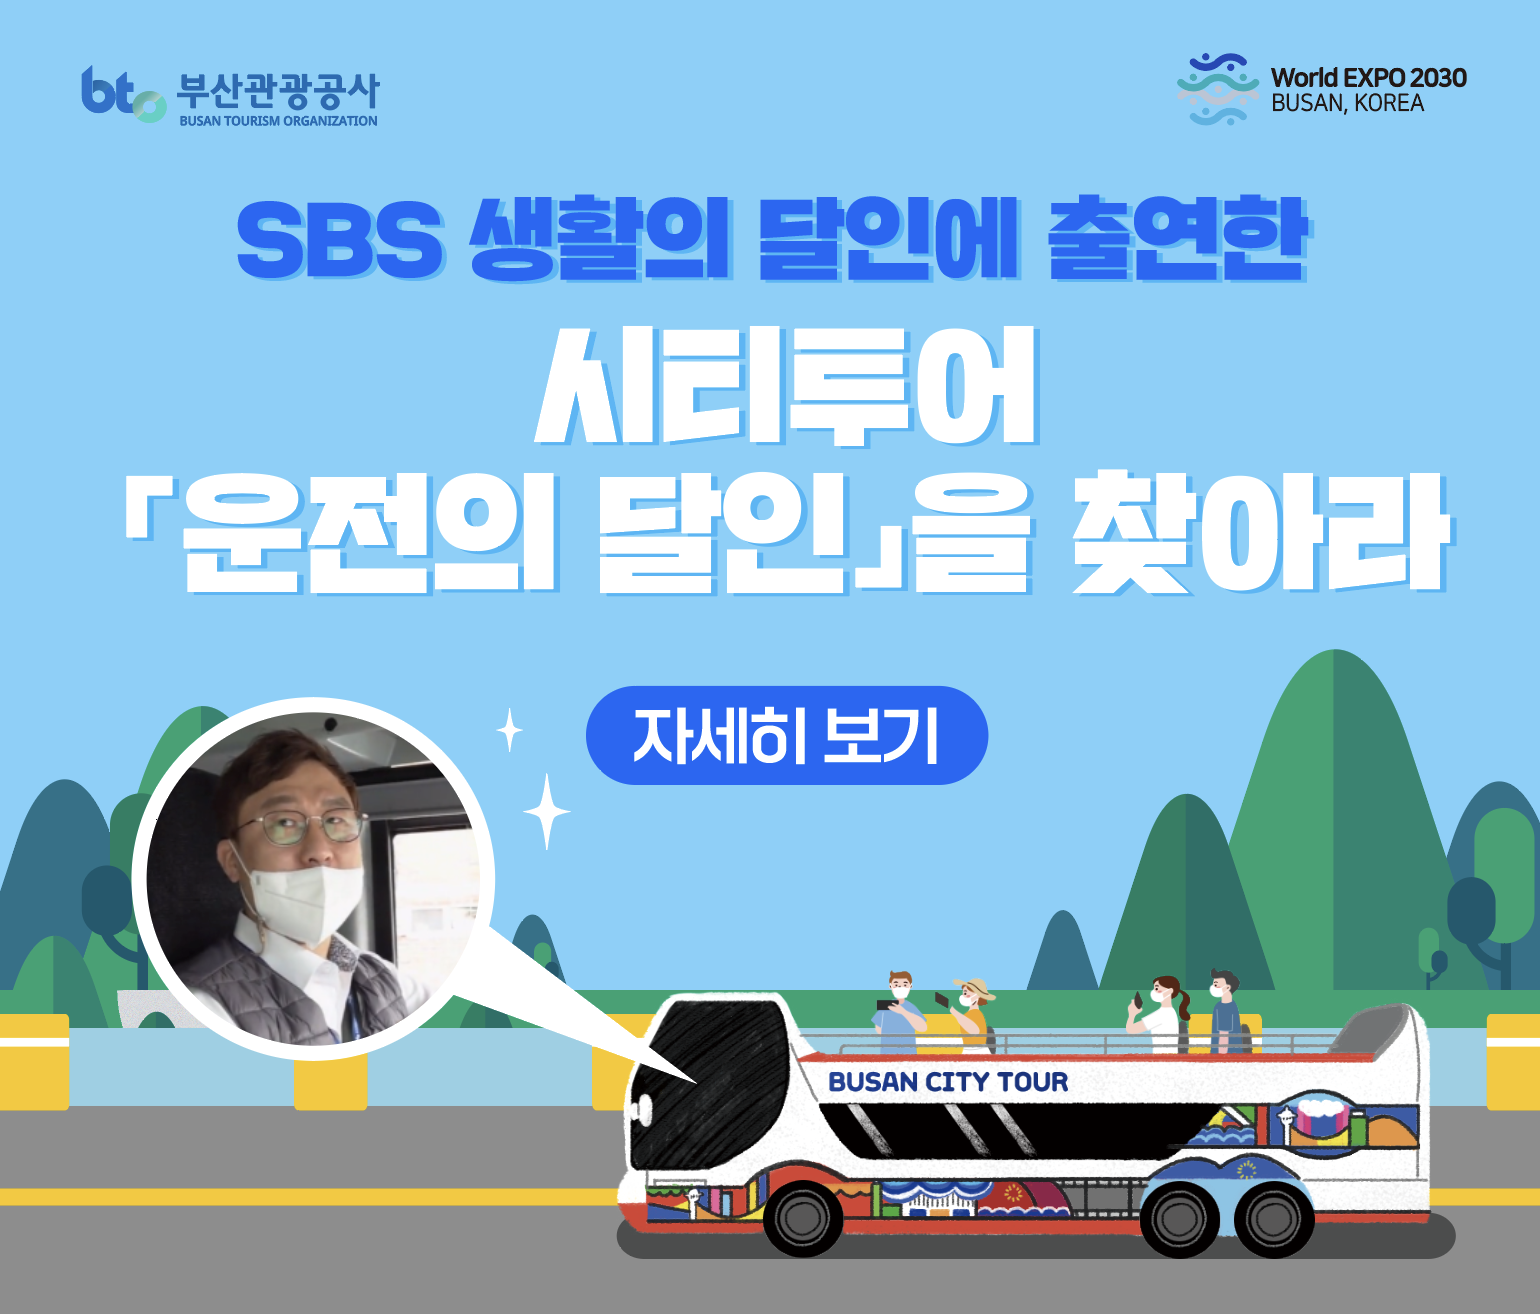 SBS 생활의 달인에 출연한 시티투어 '운전의 달인'을 찾아라!!